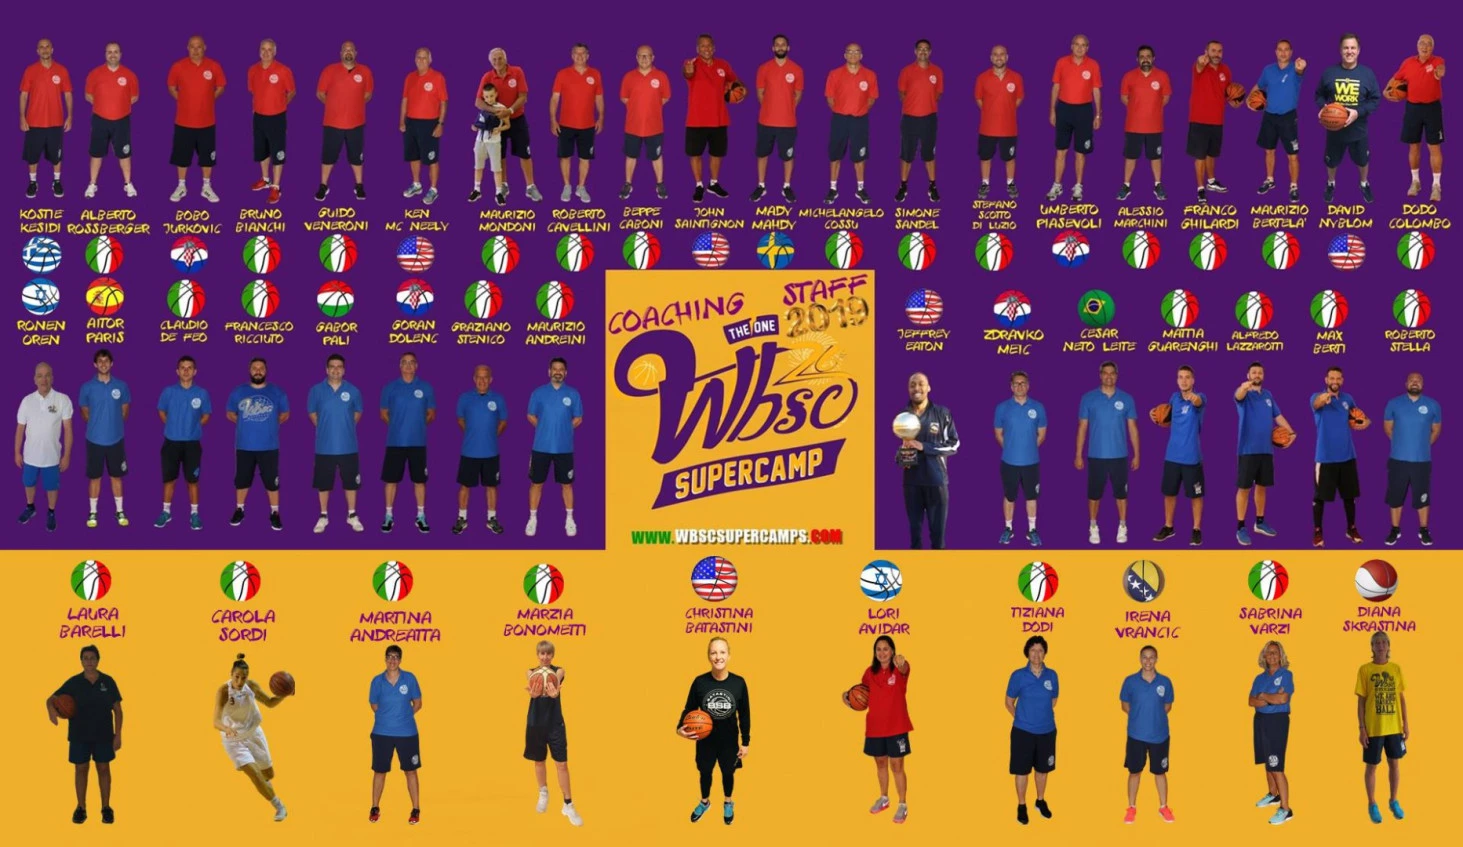 26° WBSC Supercamp Italy 2019 – International Basketball School “Claudio Papini” staff!!